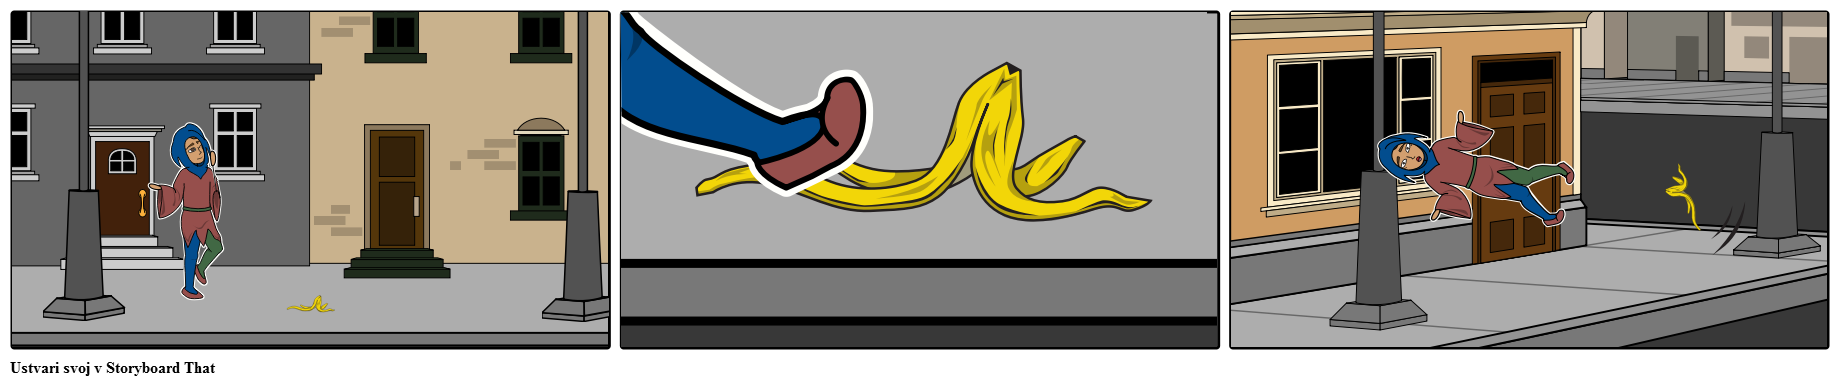 Jester zdrsne na banani lupino